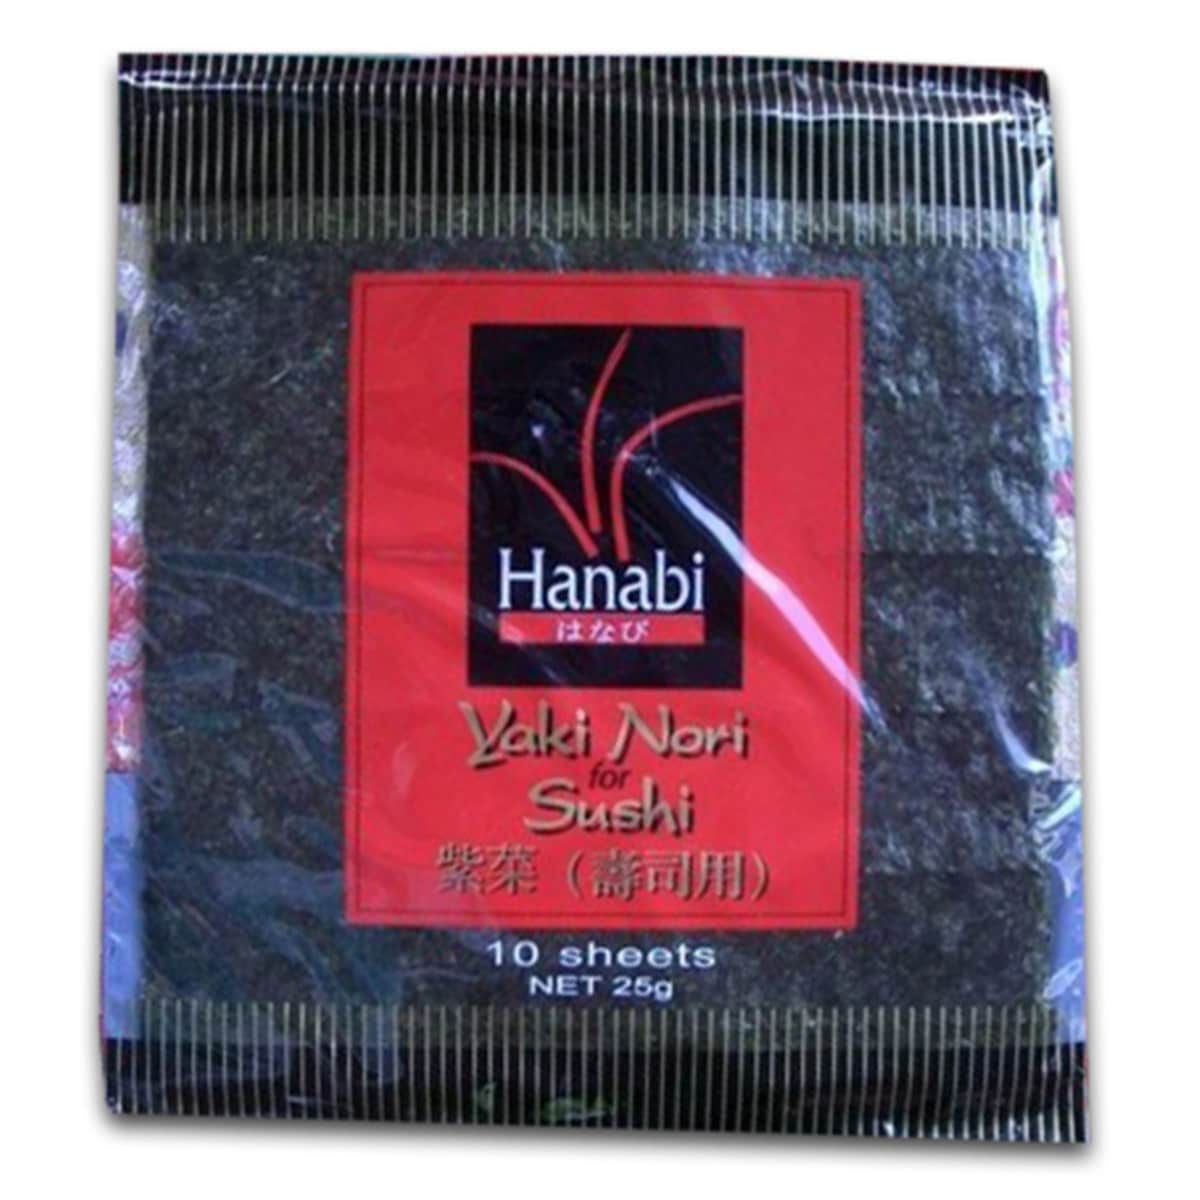 Buy Hanabi Roasted Seaweed Yaki Nori Sheets for Sushi 10 Sheets - 25 gm